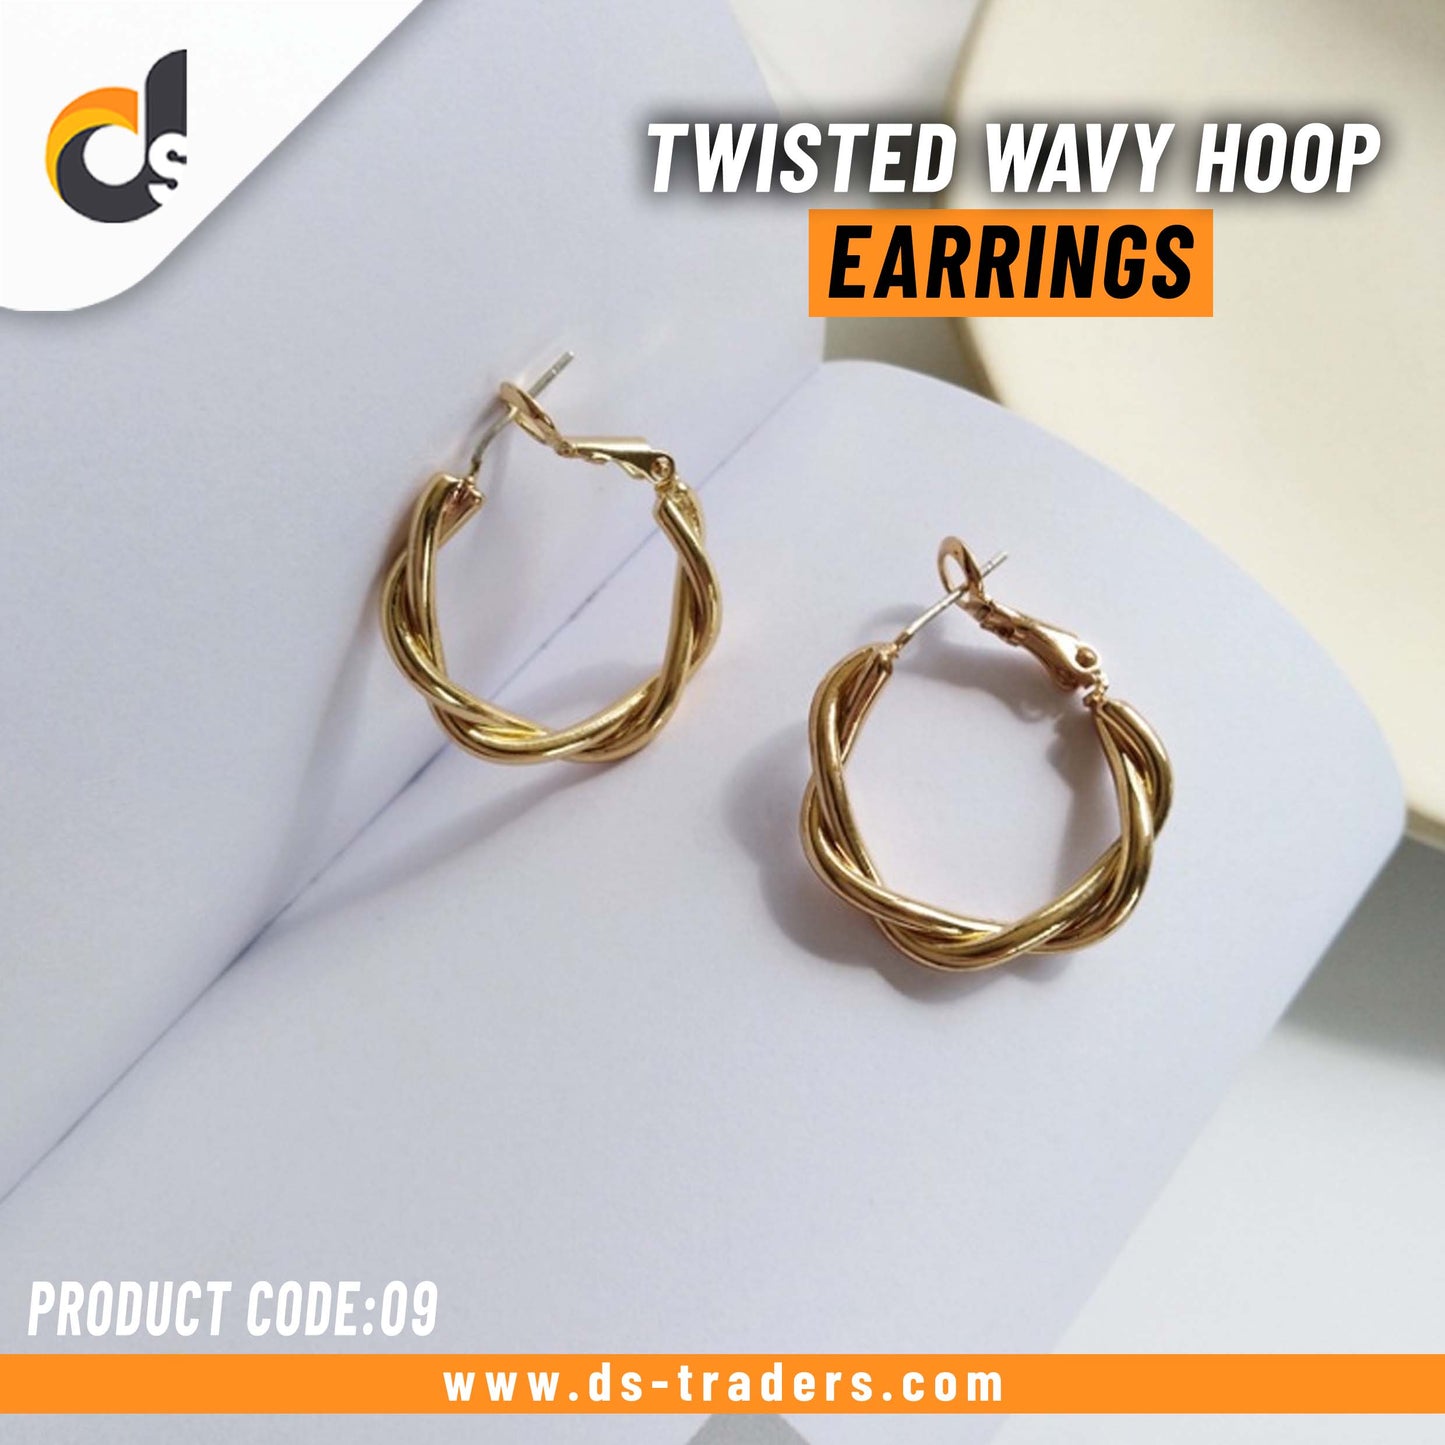 Twisted Wavy Hoop earrings